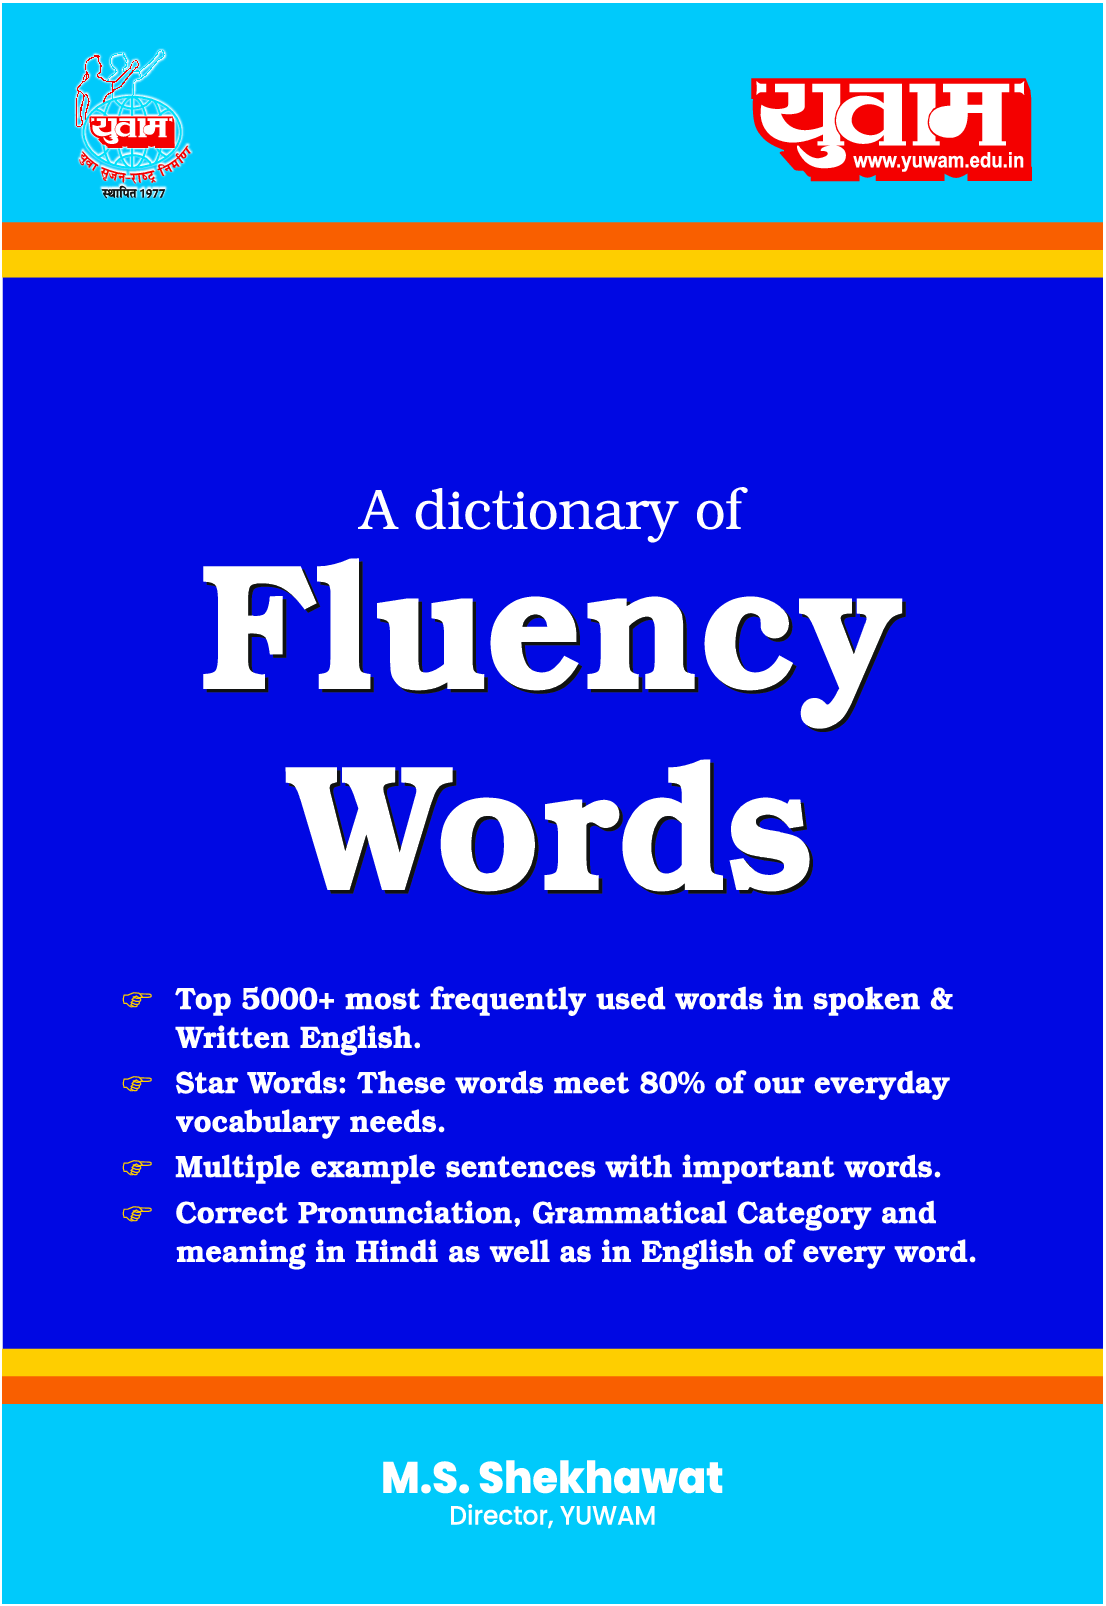 Fluency Words